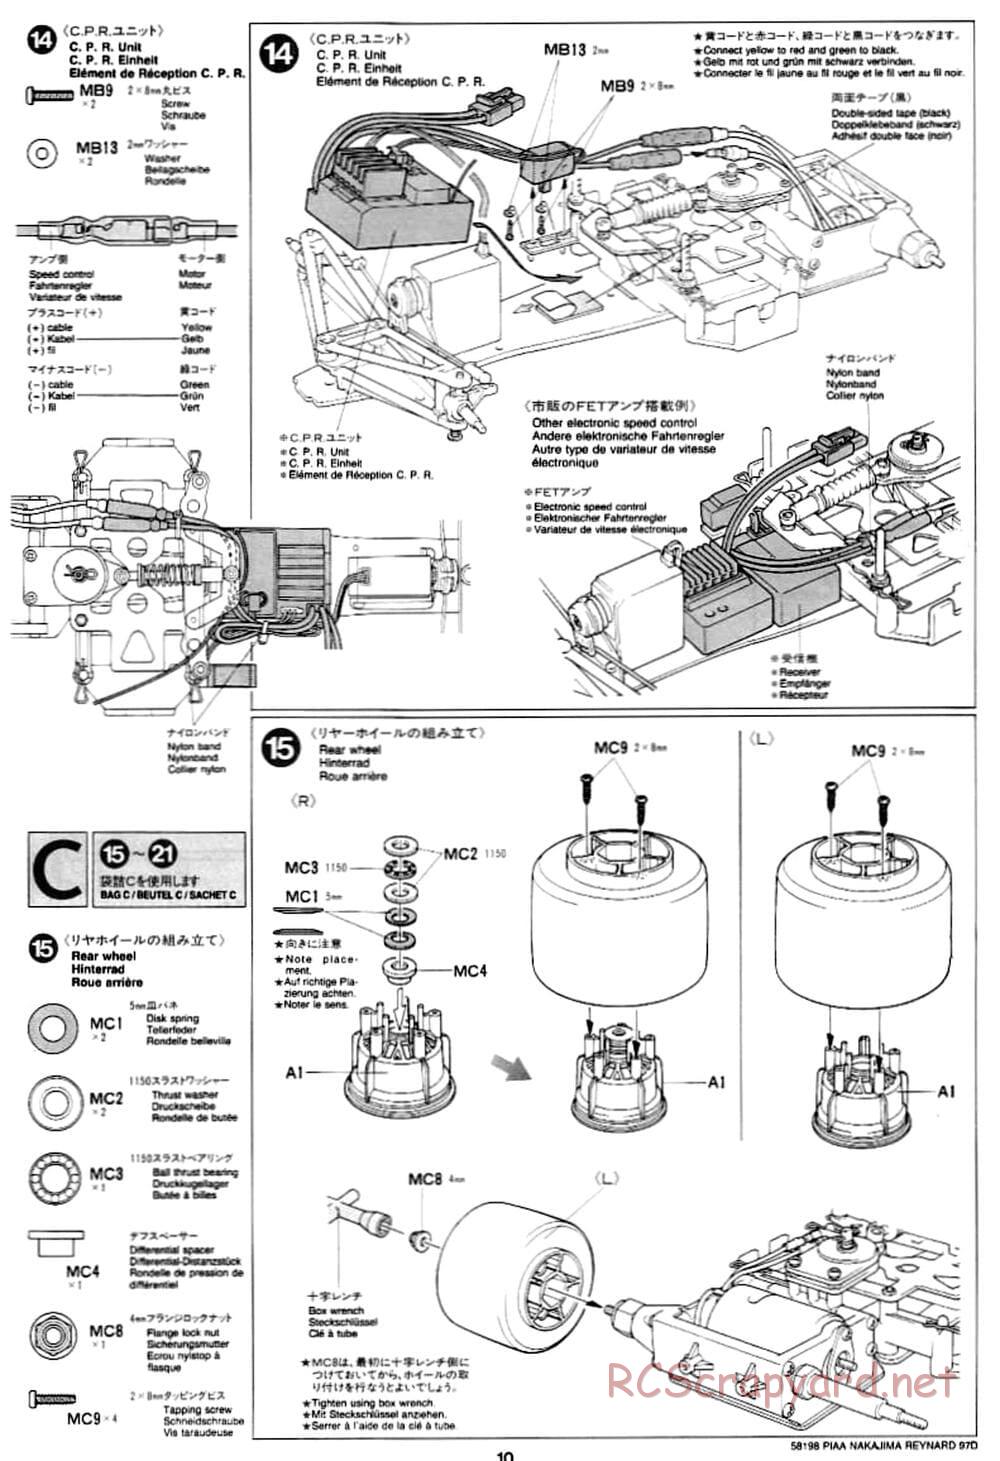 Tamiya - PIAA Nakajima Reynard 97D - F103 Chassis - Manuel - Page 10